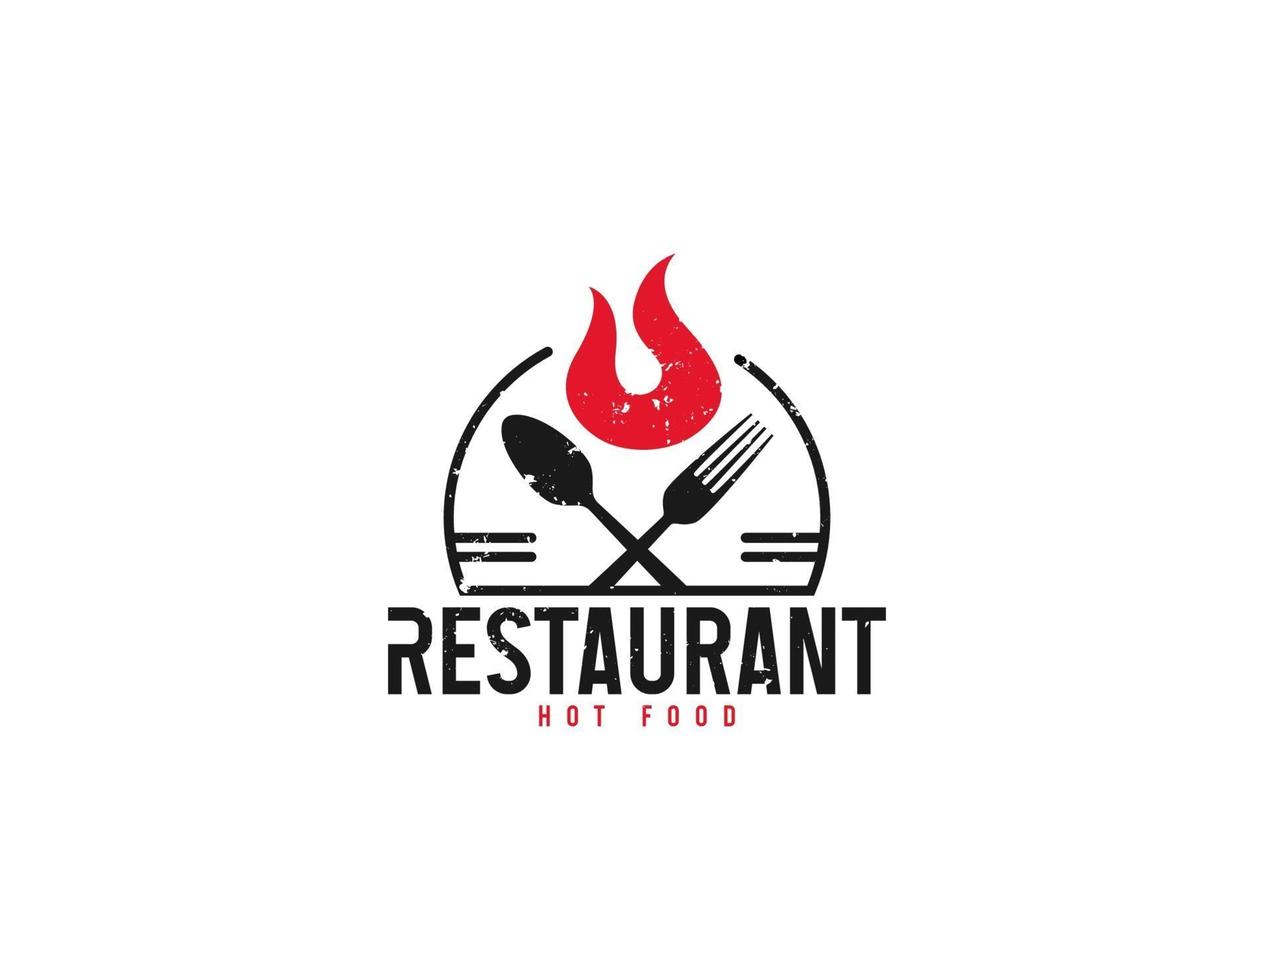 Hot food restaurant logo design vector